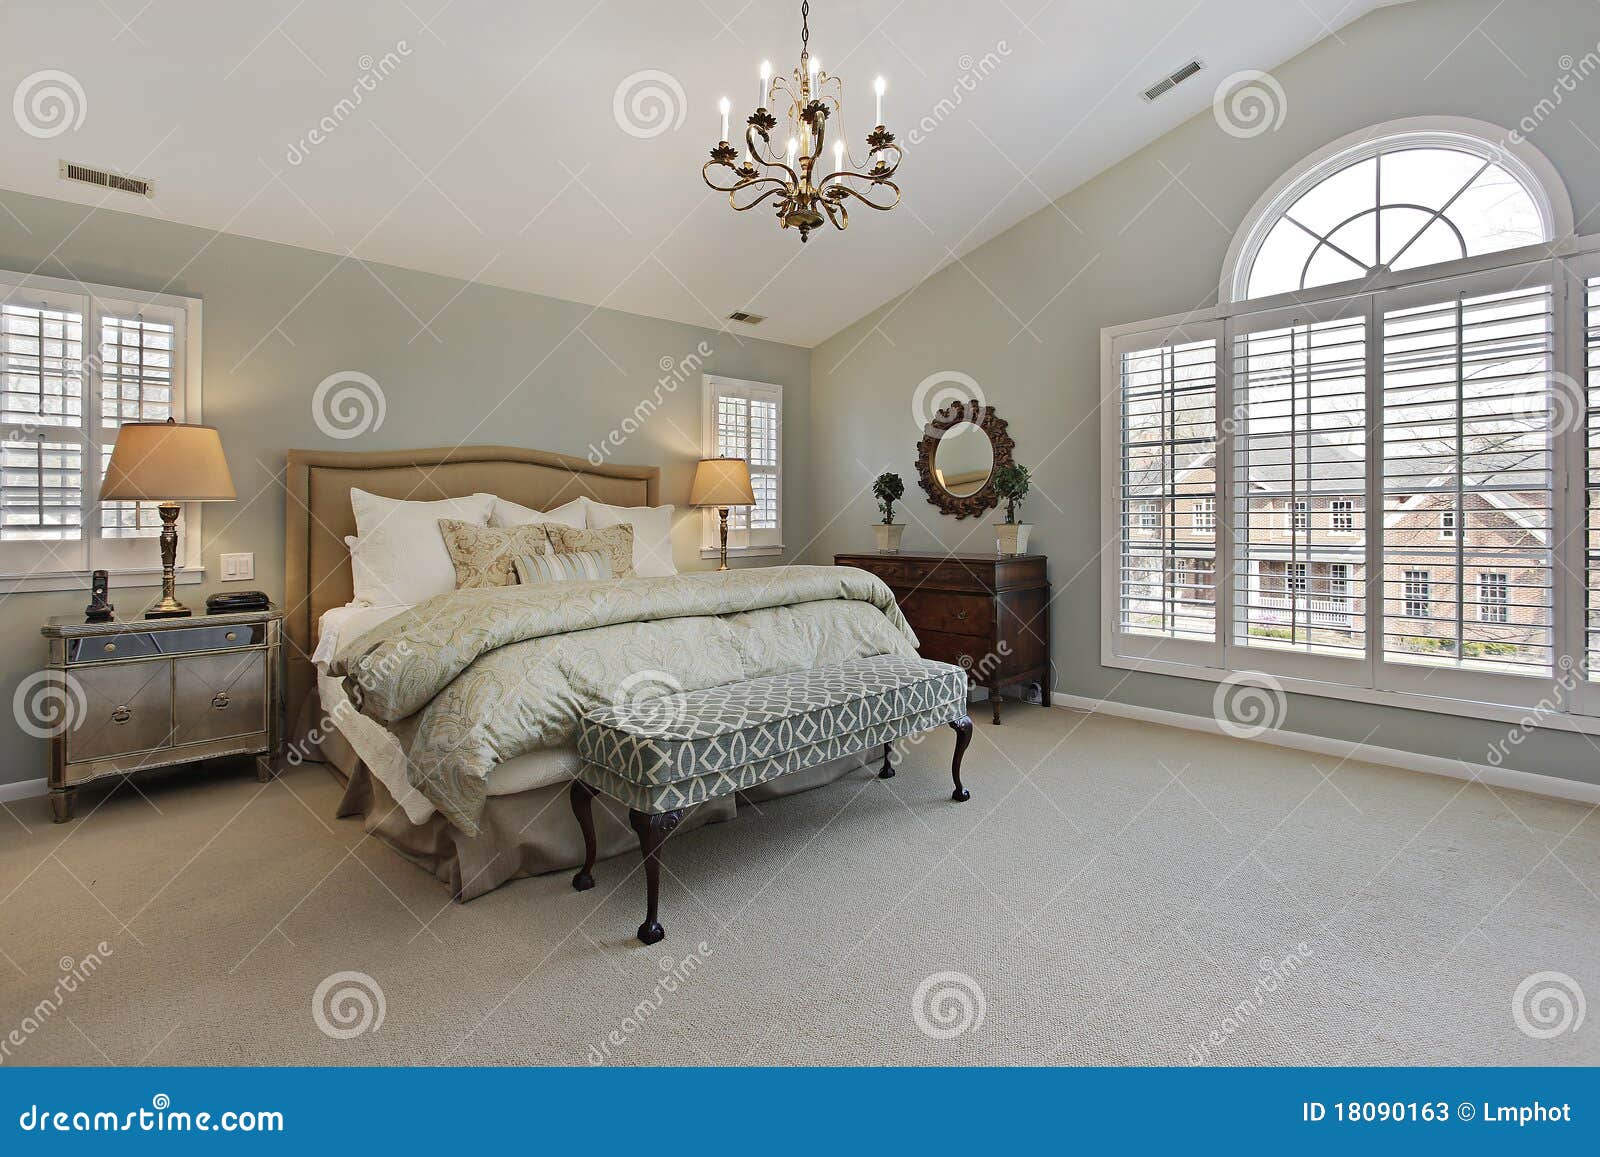 master bedroom with circular window